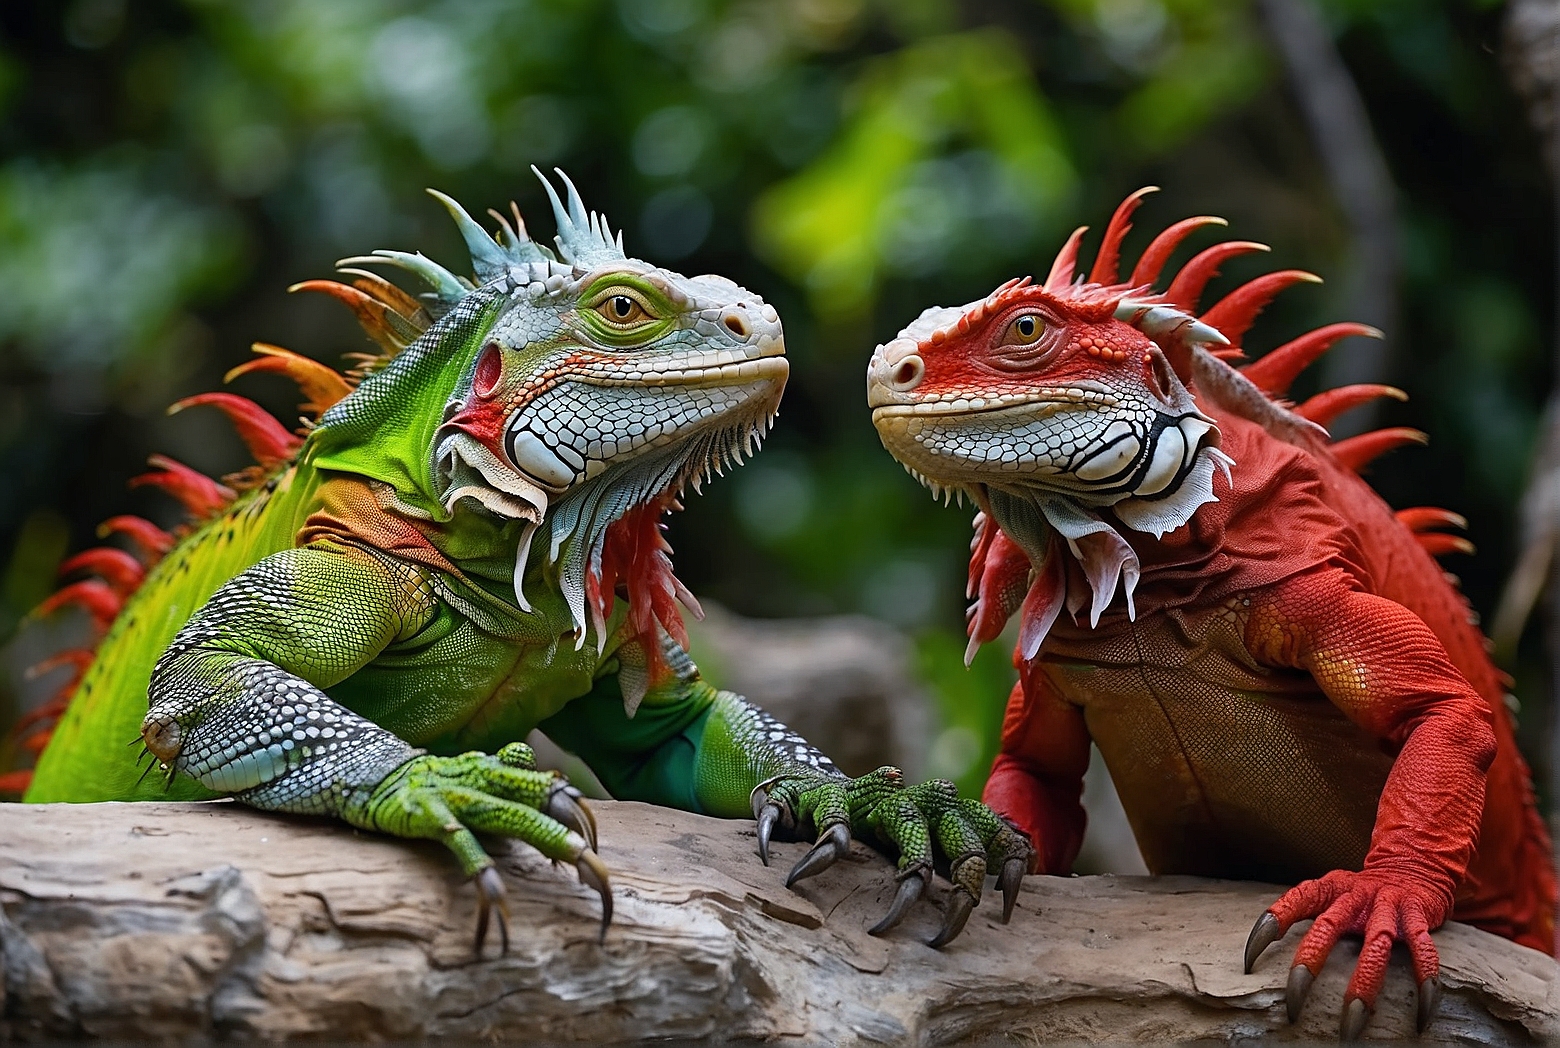 A Colorful Comparison: Green Iguana vs Red Iguana